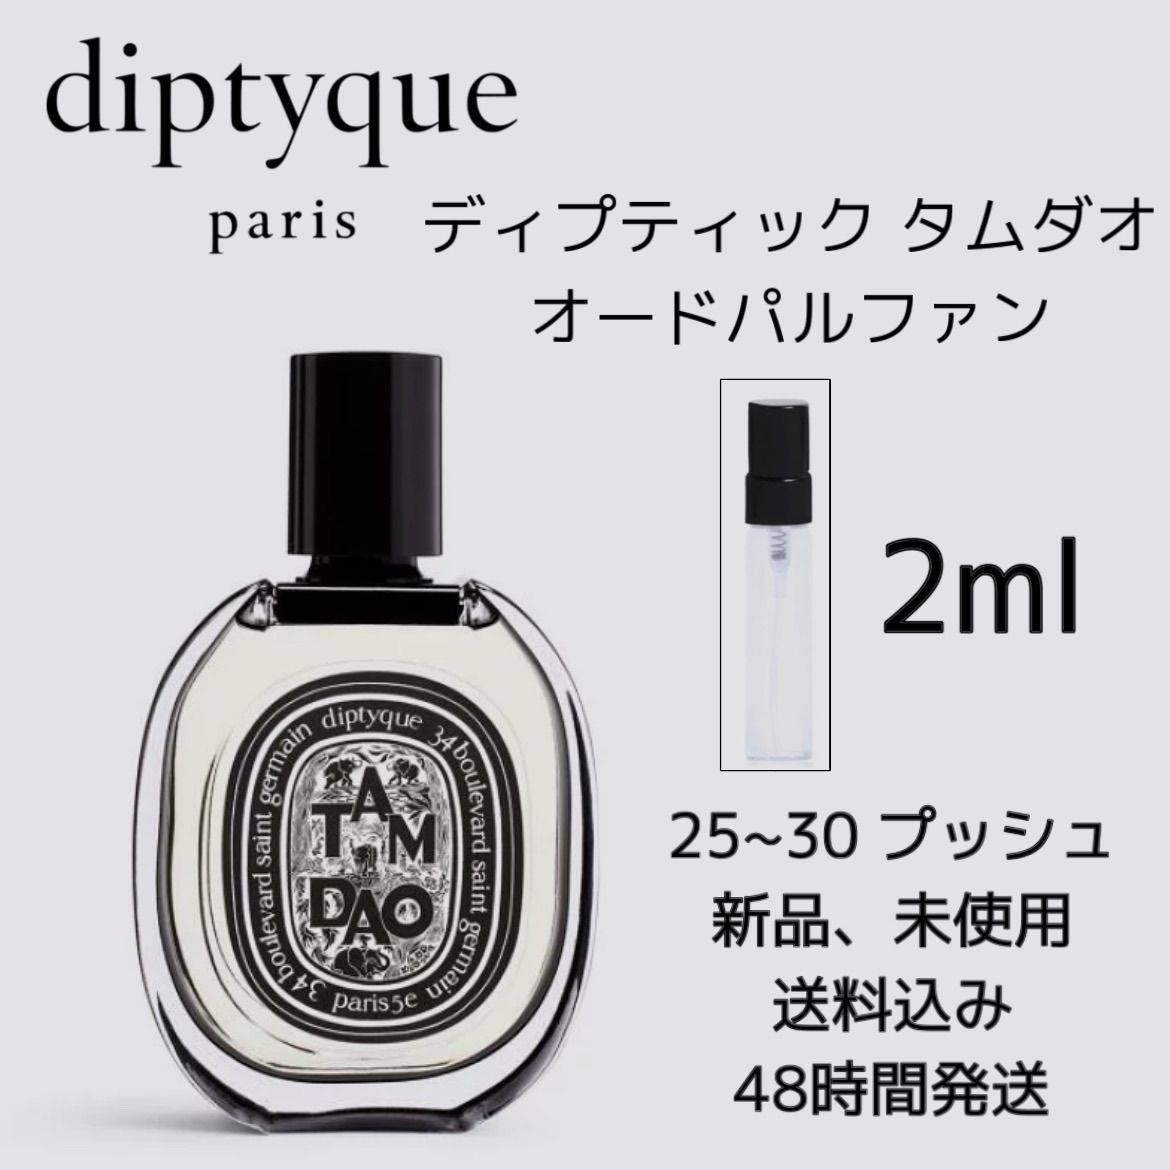 TAM DAO 2ml diptyque タムダオ 香水 ディプティック - ユニセックス